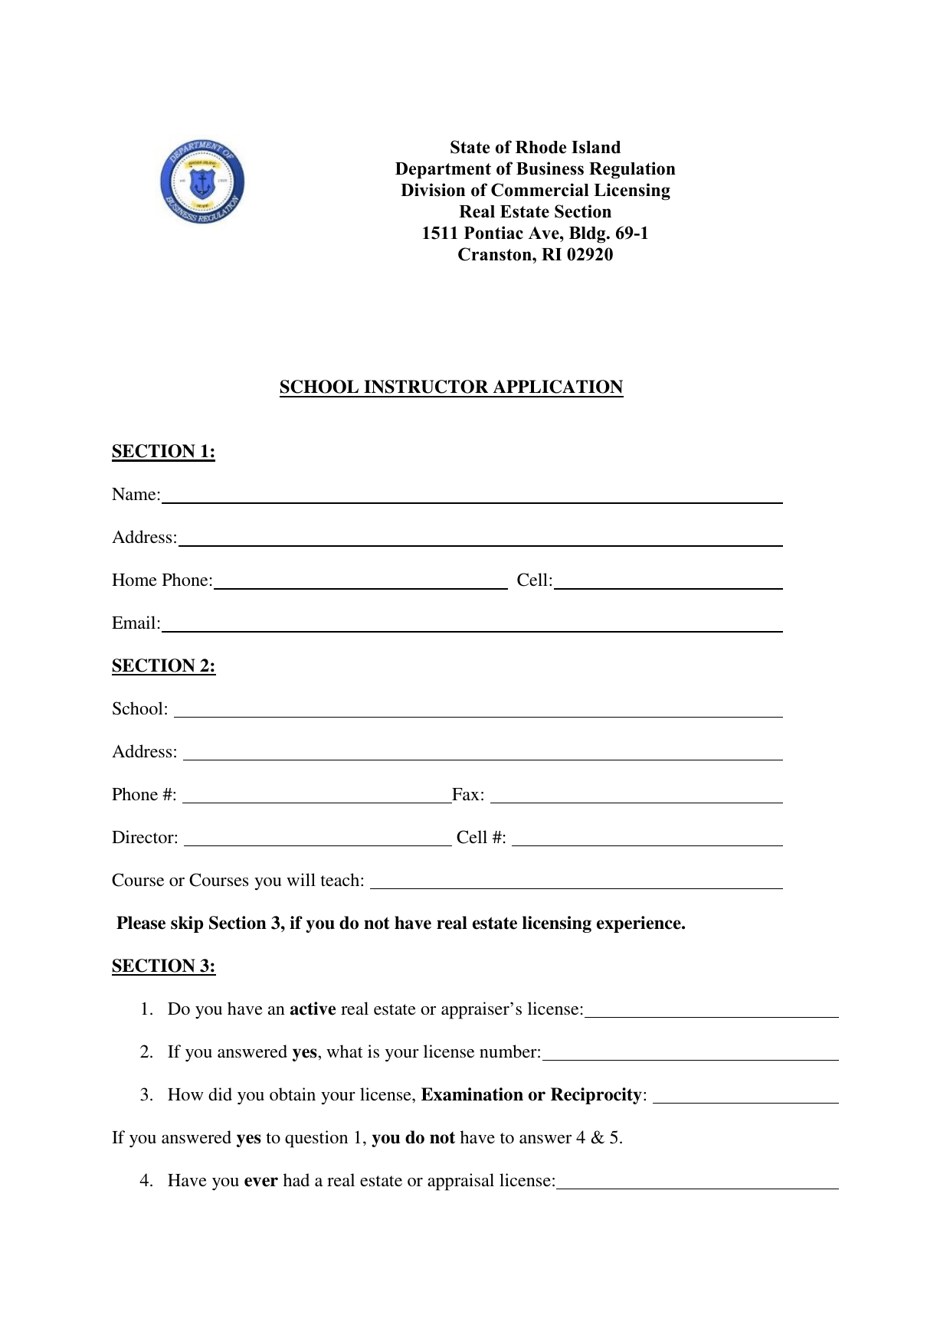 School Instructor Application - Rhode Island, Page 1